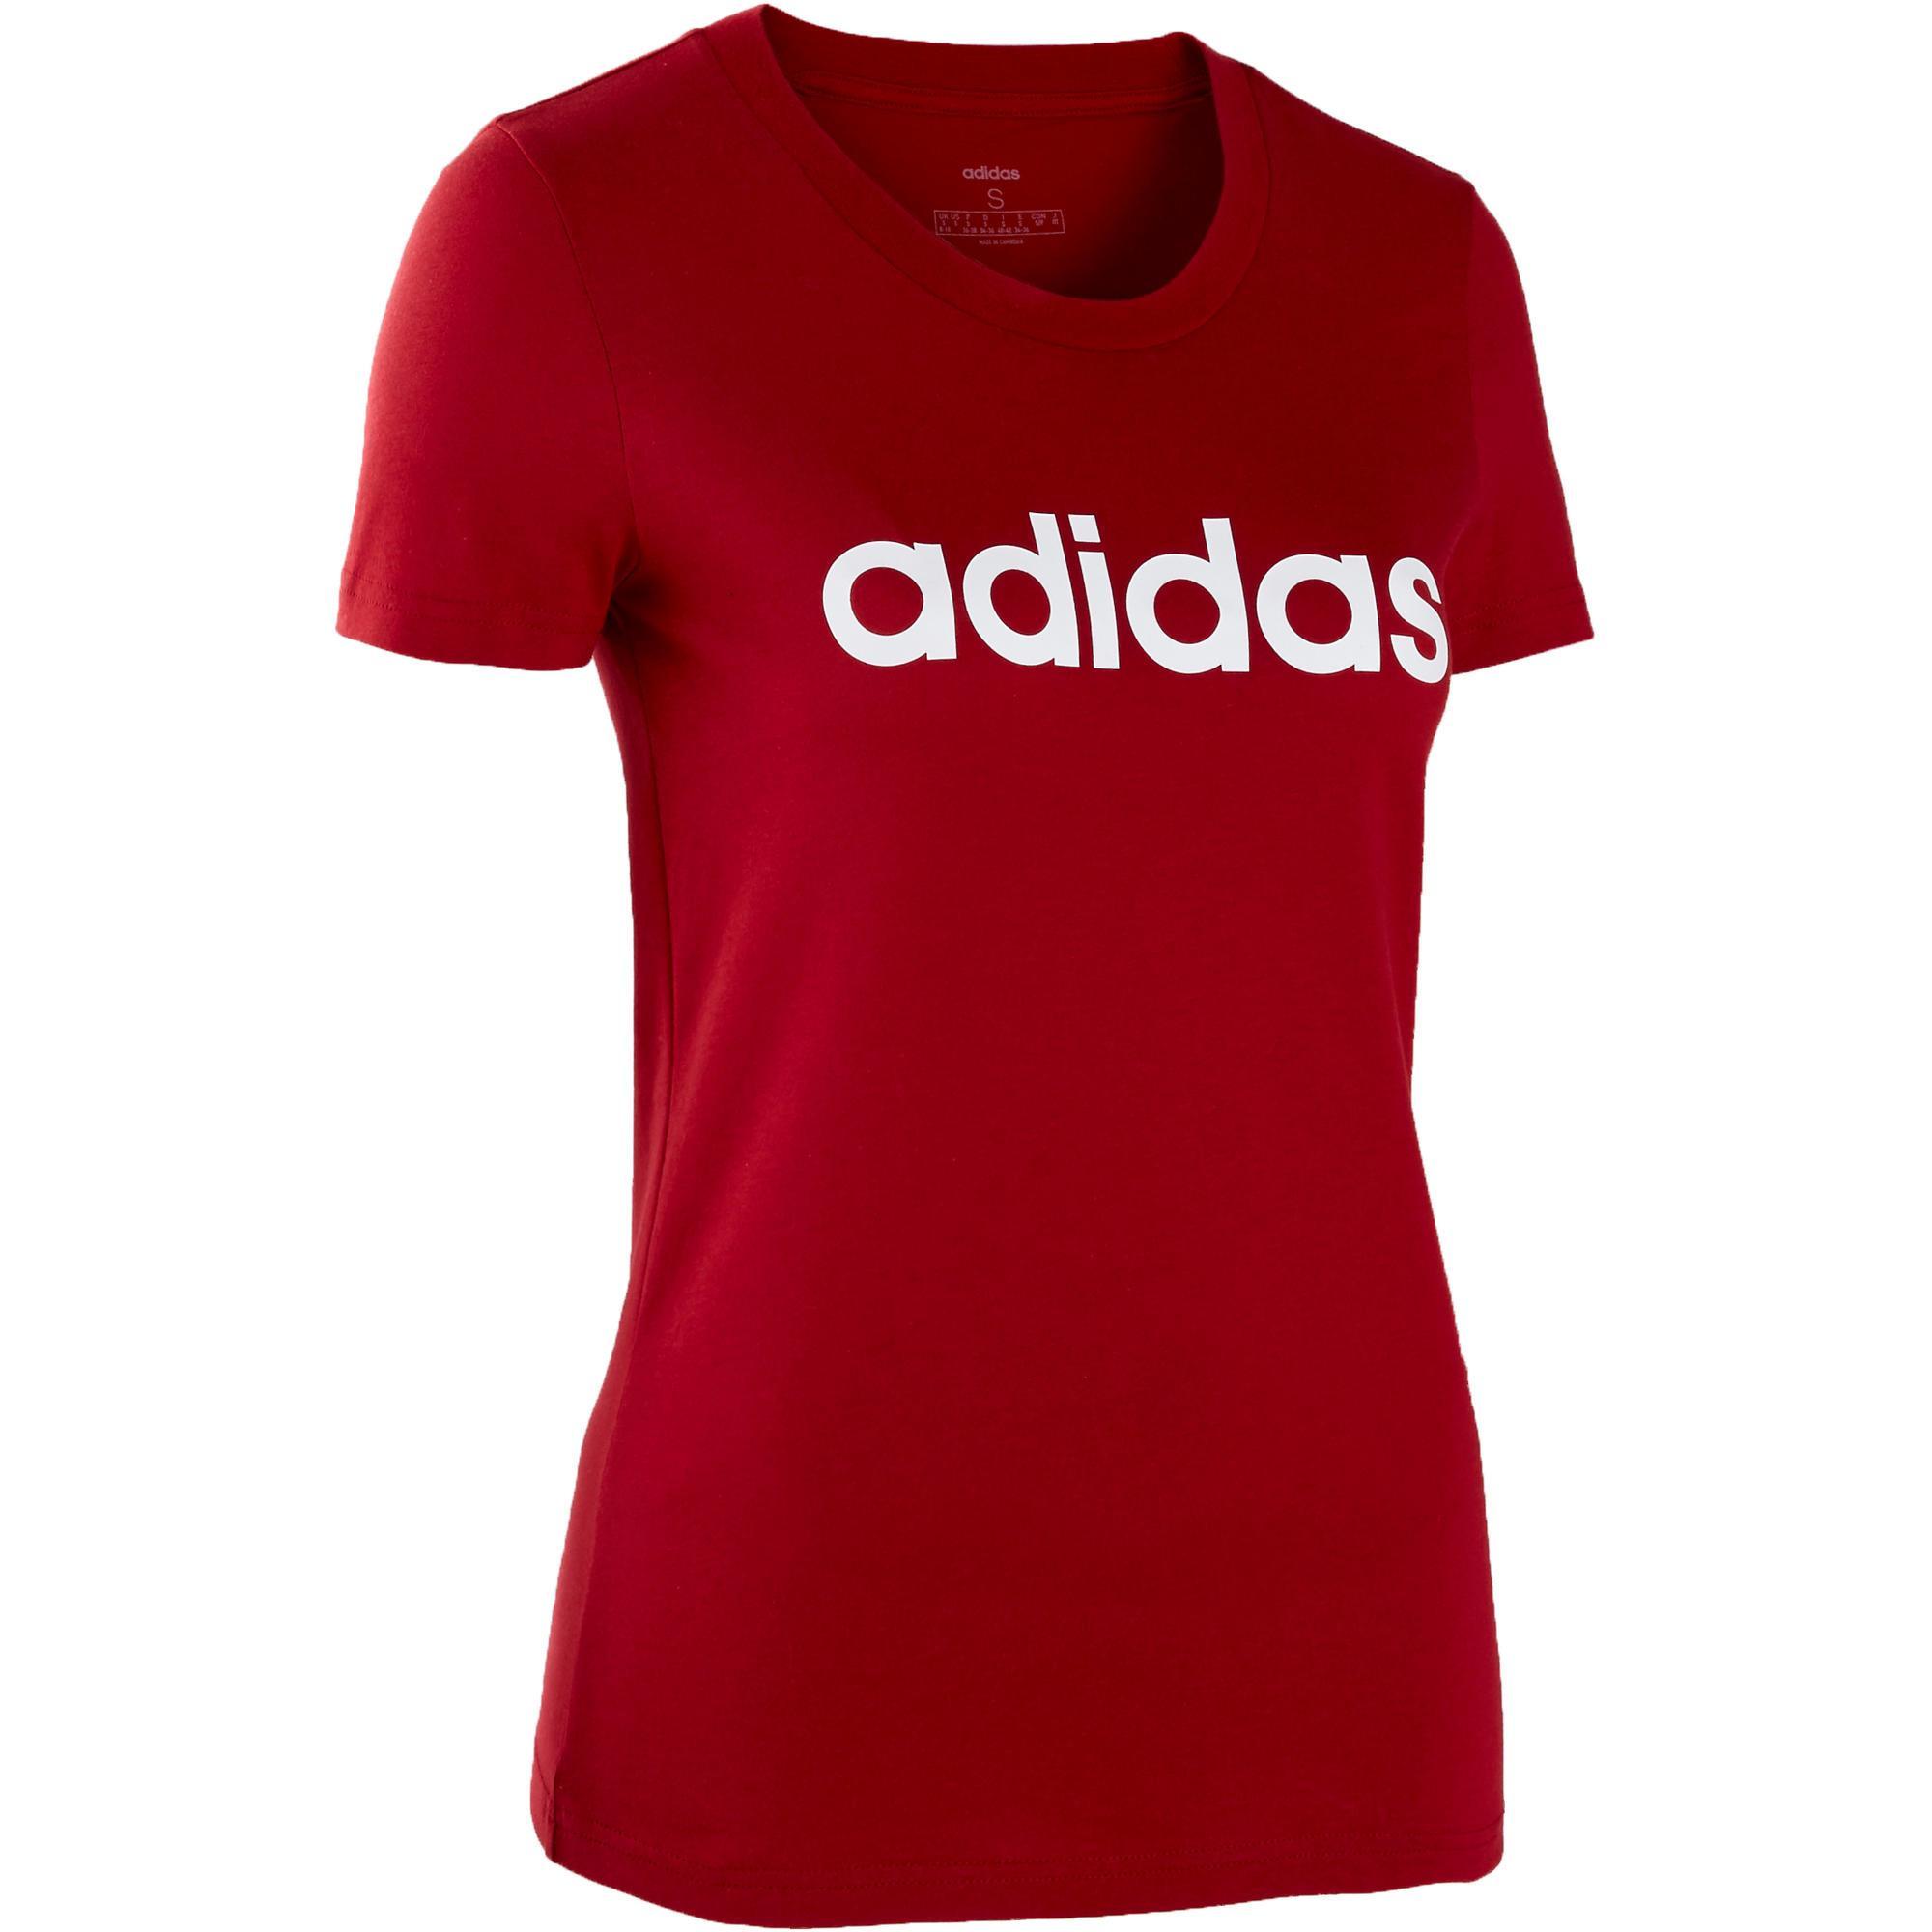 tee shirt adidas femme decathlon